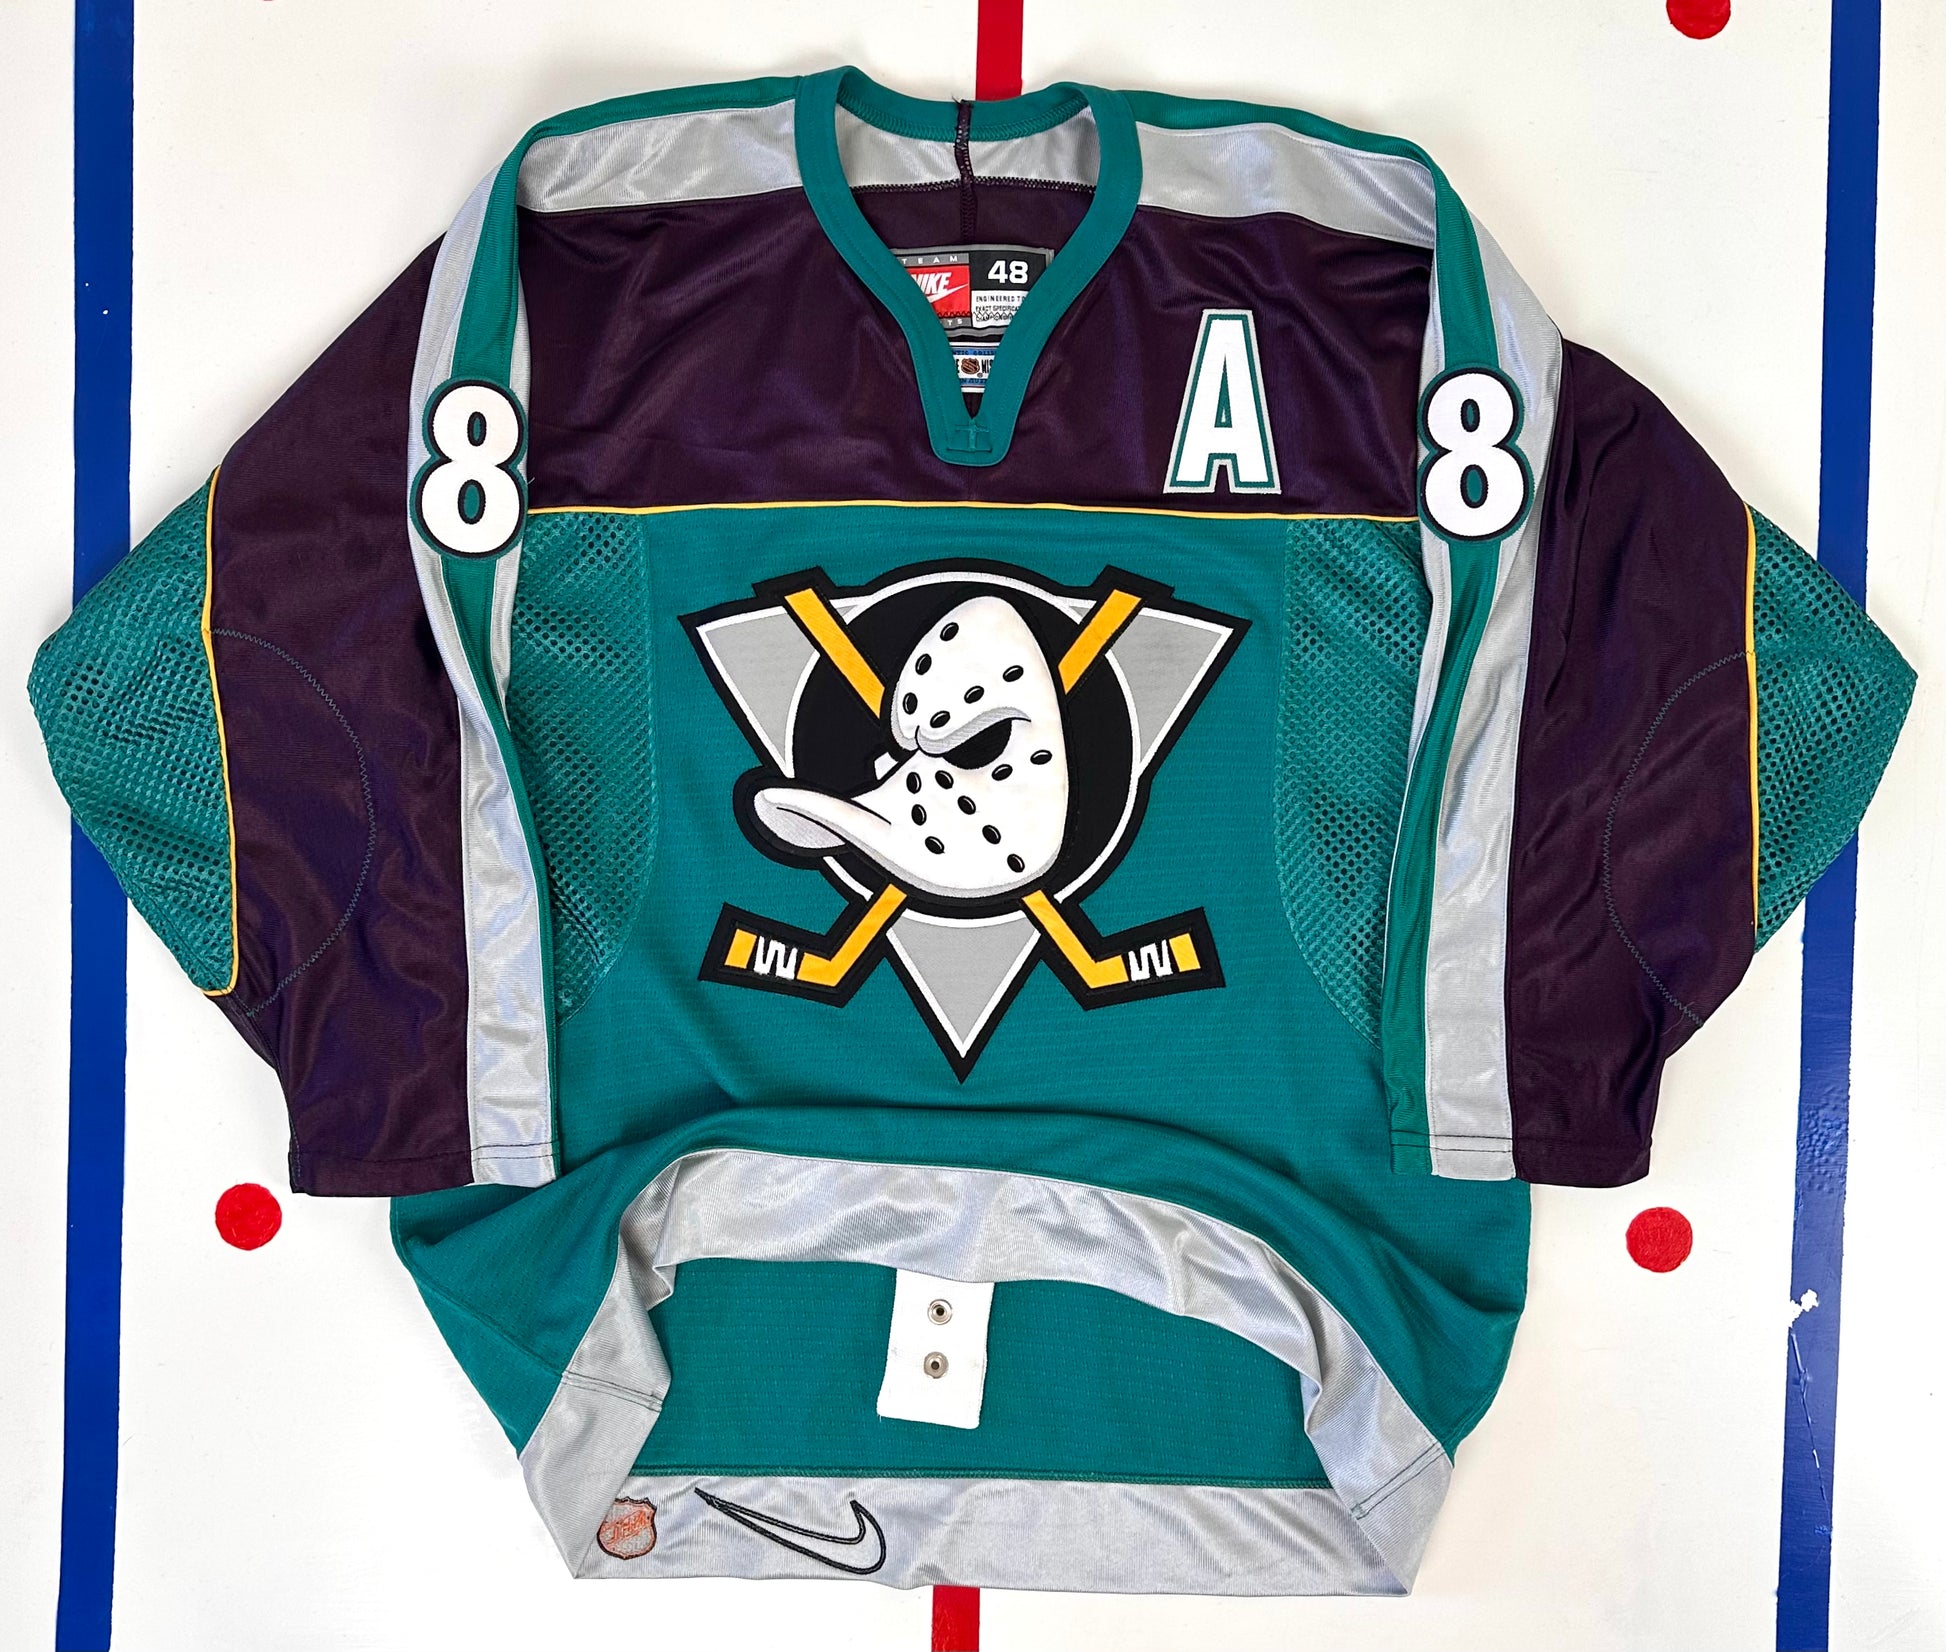 1999 Anaheim Mighty Ducks Throwback Hockey Jerseys